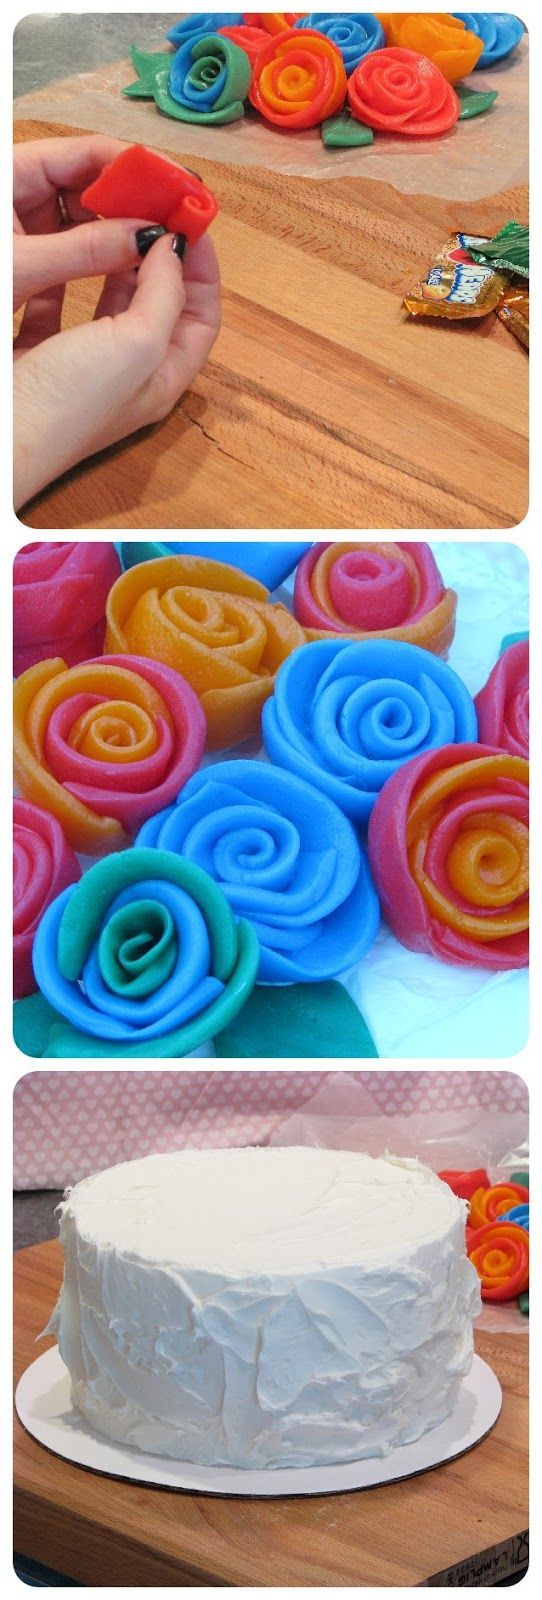 airheads rose cake diy – helllooooo valentine!